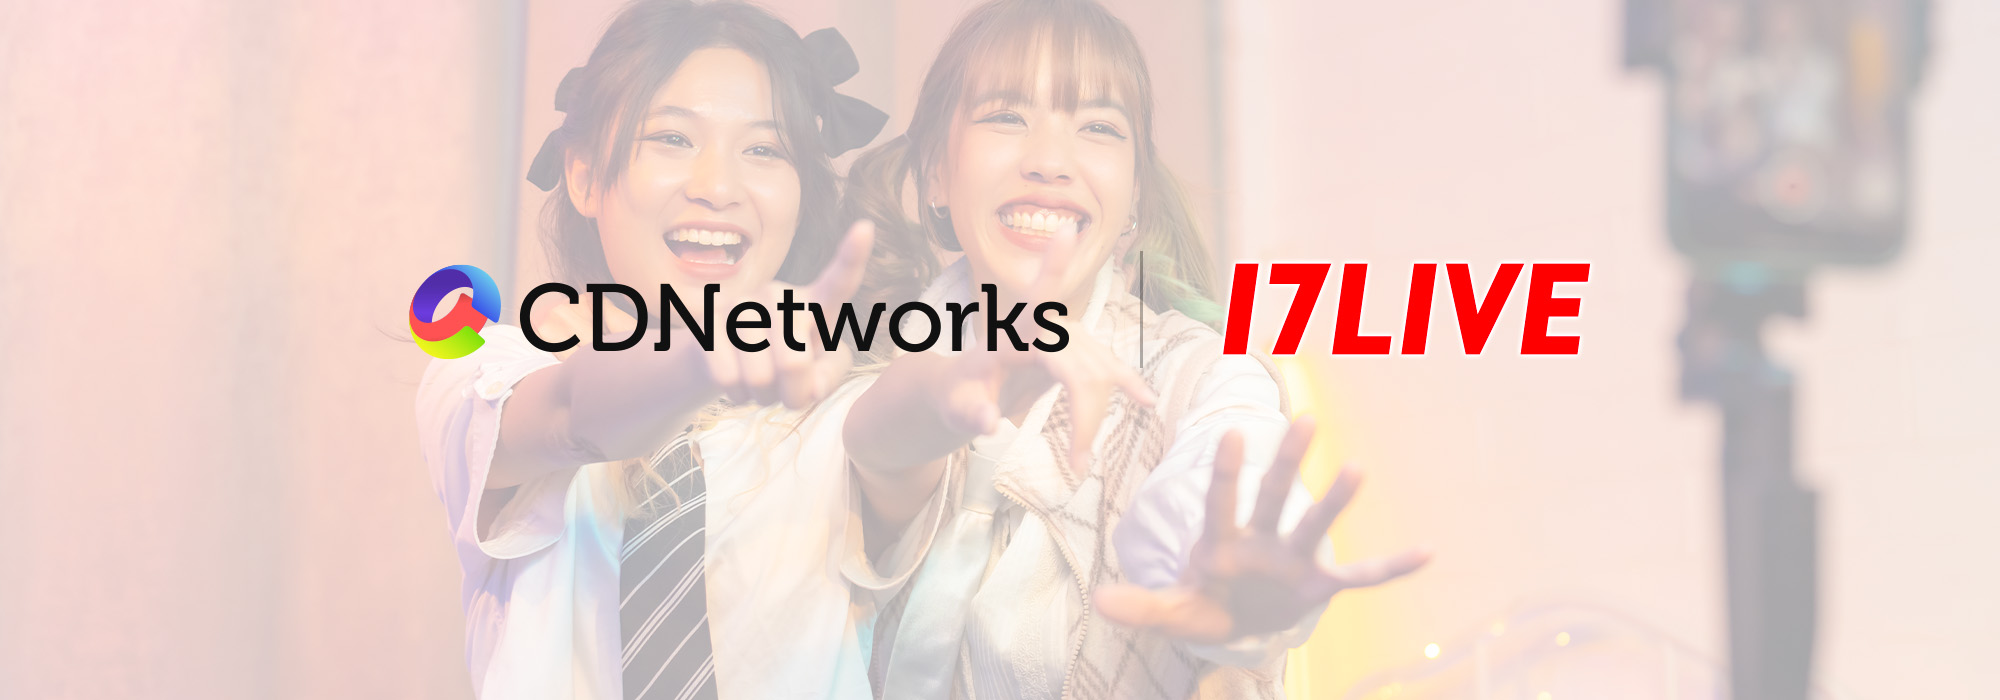 CDNetworks 与 17LIVE 联手打造亚洲顶级直播体验